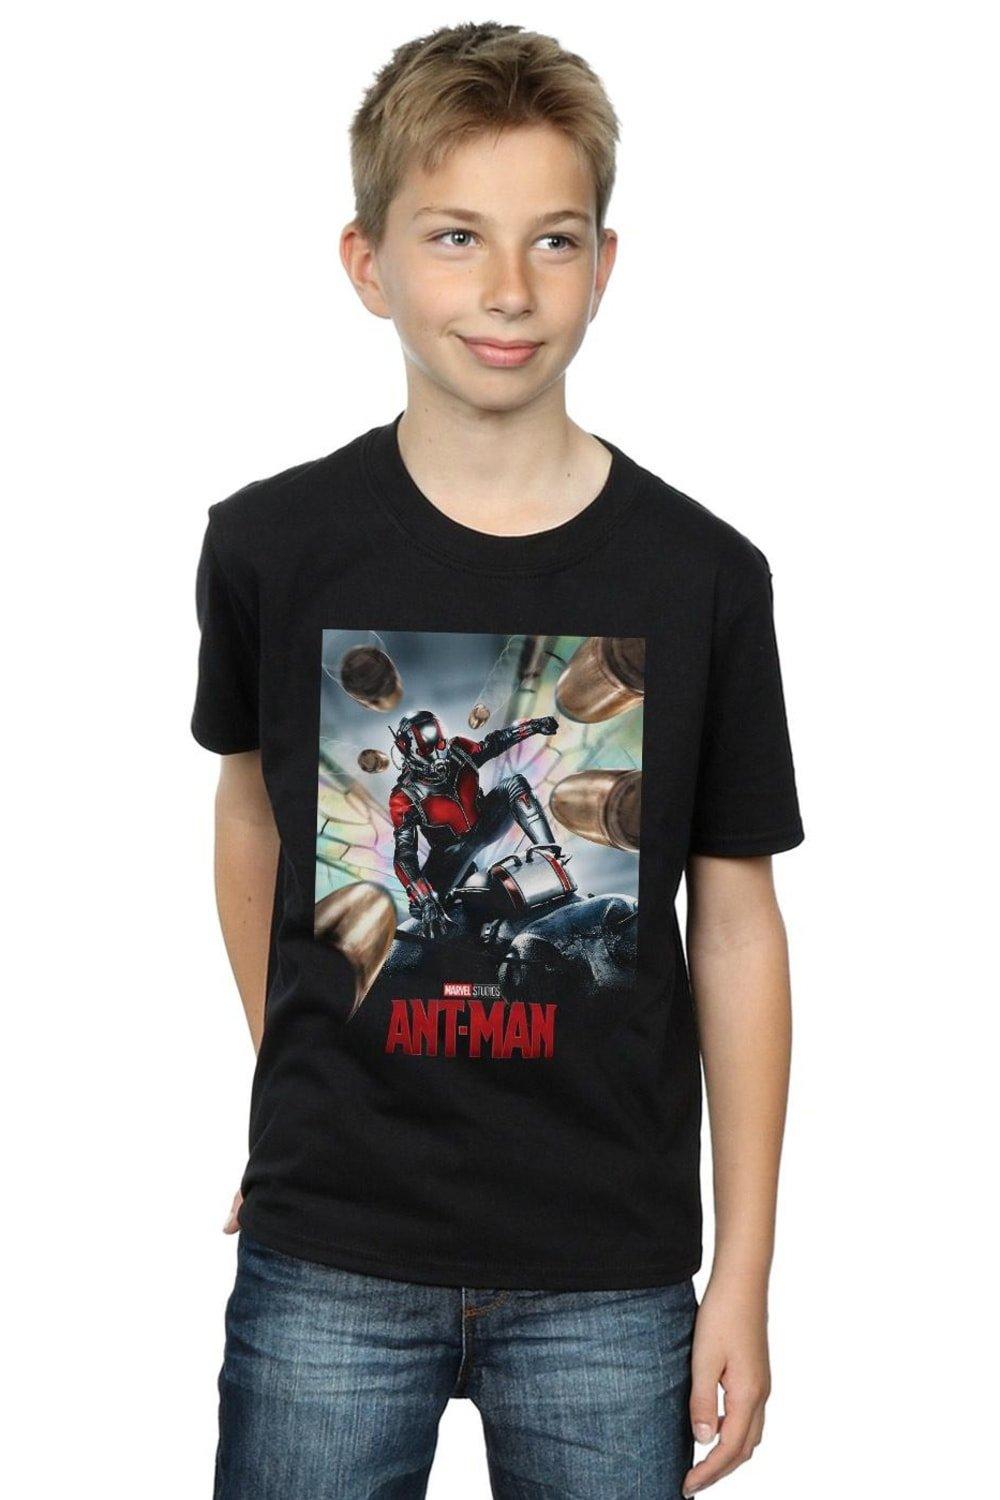 Ant-Man Poster T-Shirt